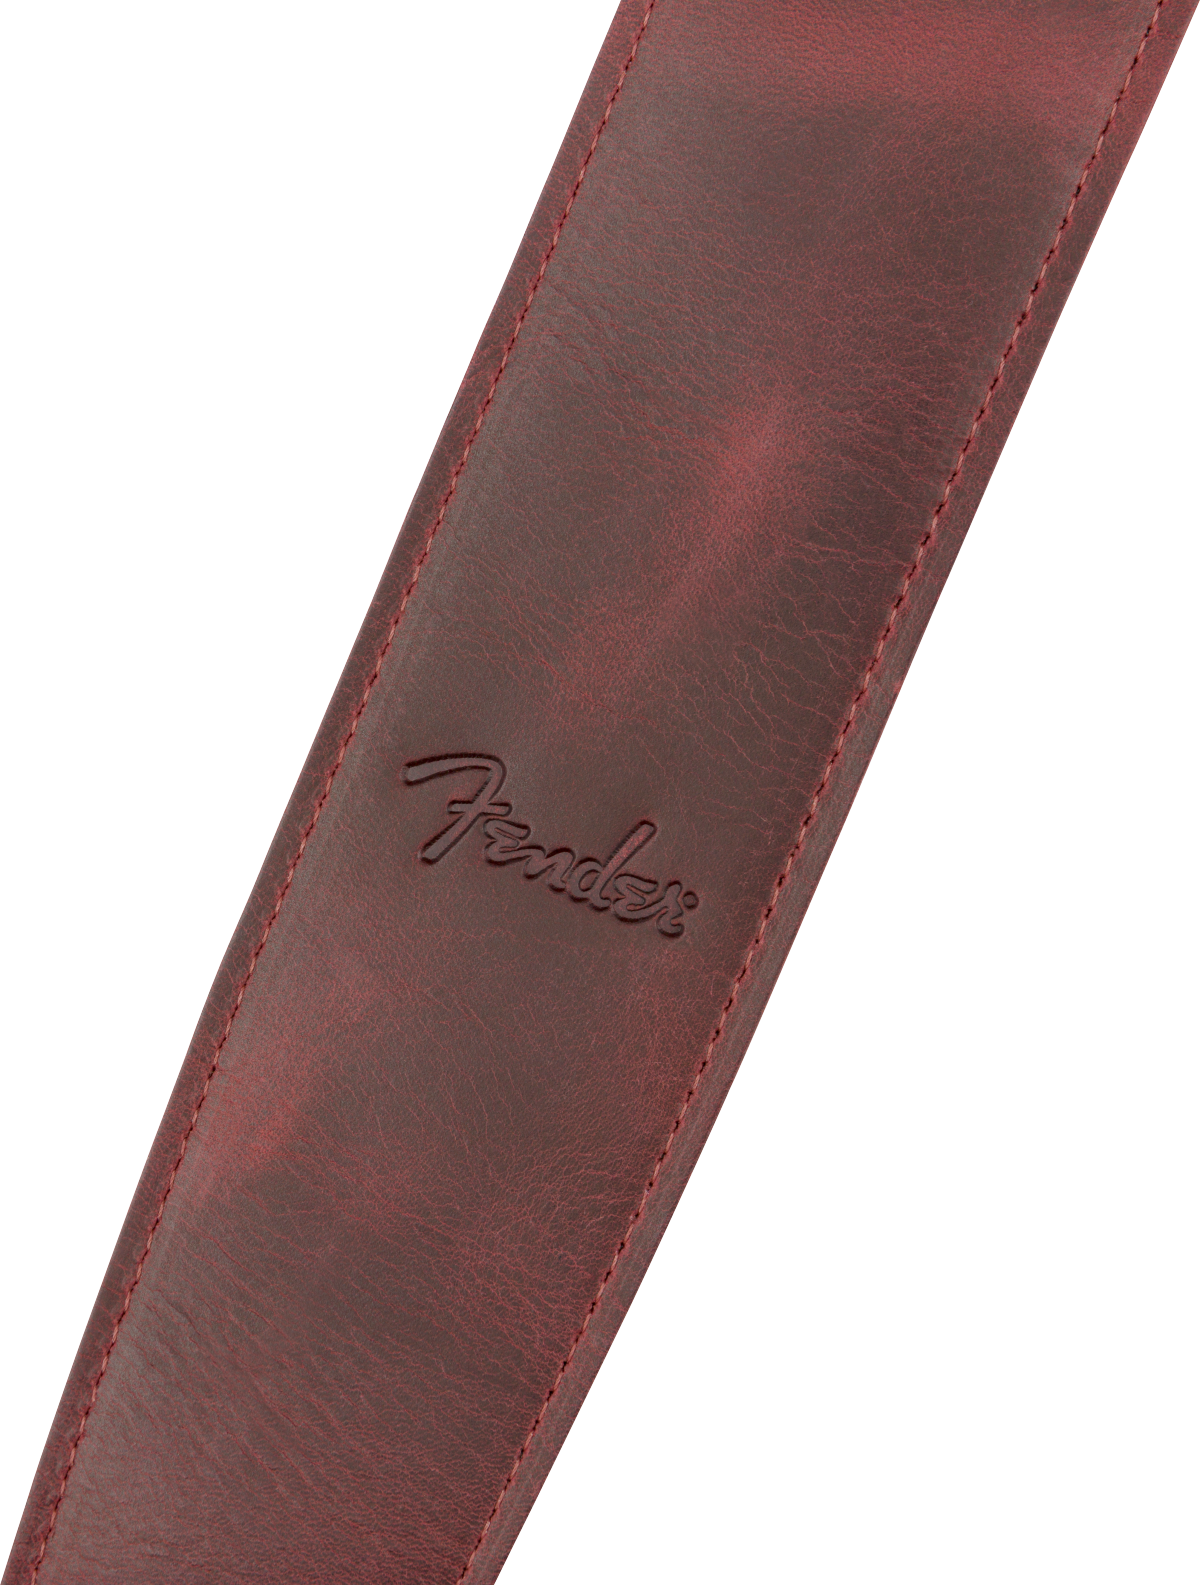 Fender Limited Leather Strap - Oxblood